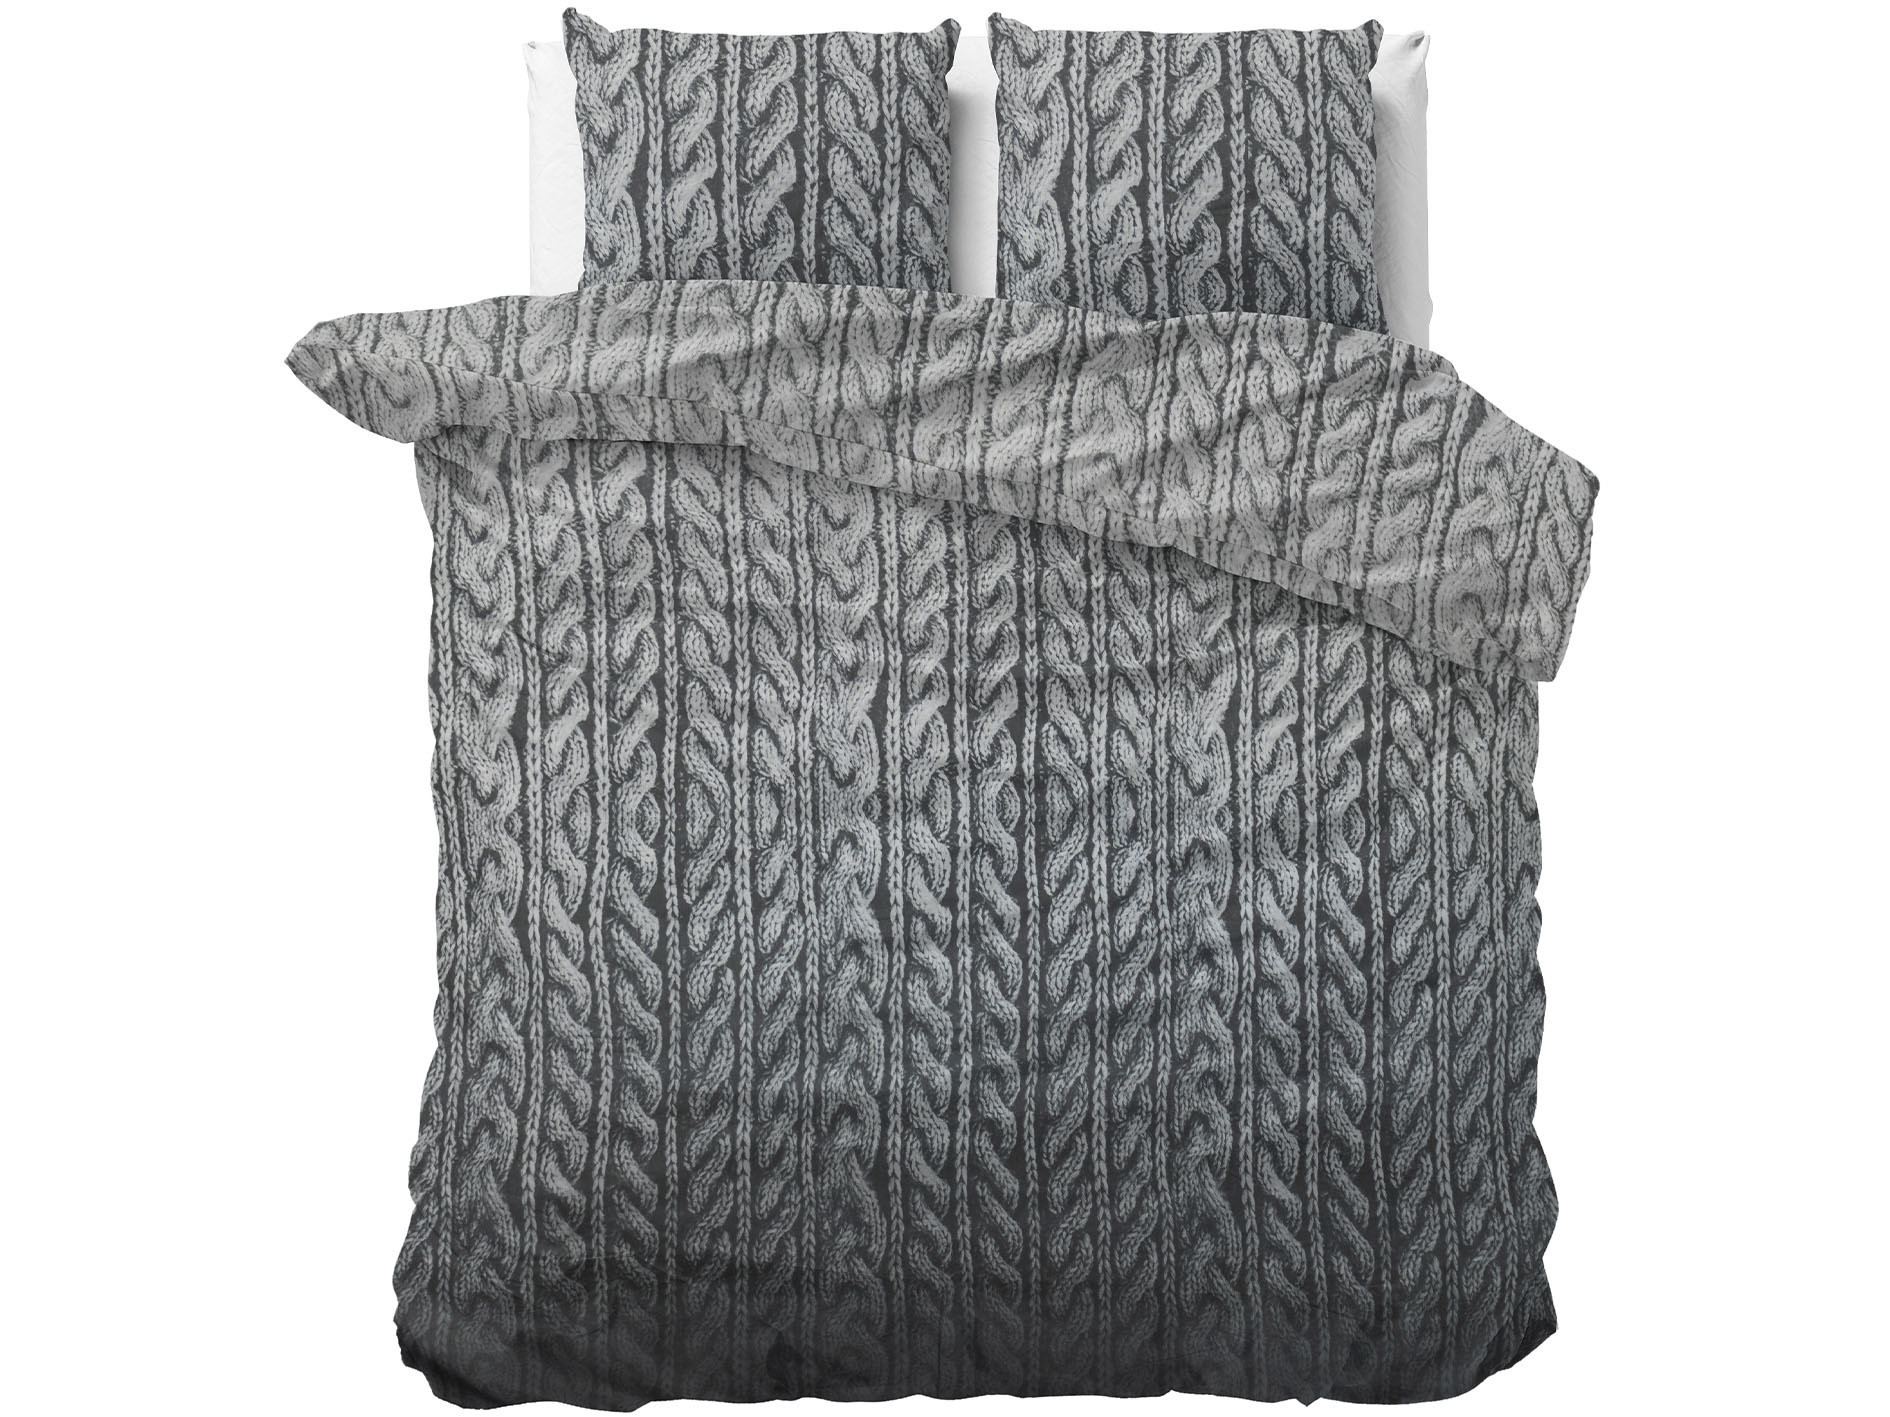 Dekbedovertrek Fully Knitted - Lits-Jumeaux (240x220 cm) - Grijs & Antraciet Katoen - Dessin: Patroon - Sleeptime Elegance - Dekbed-Discounter.nl